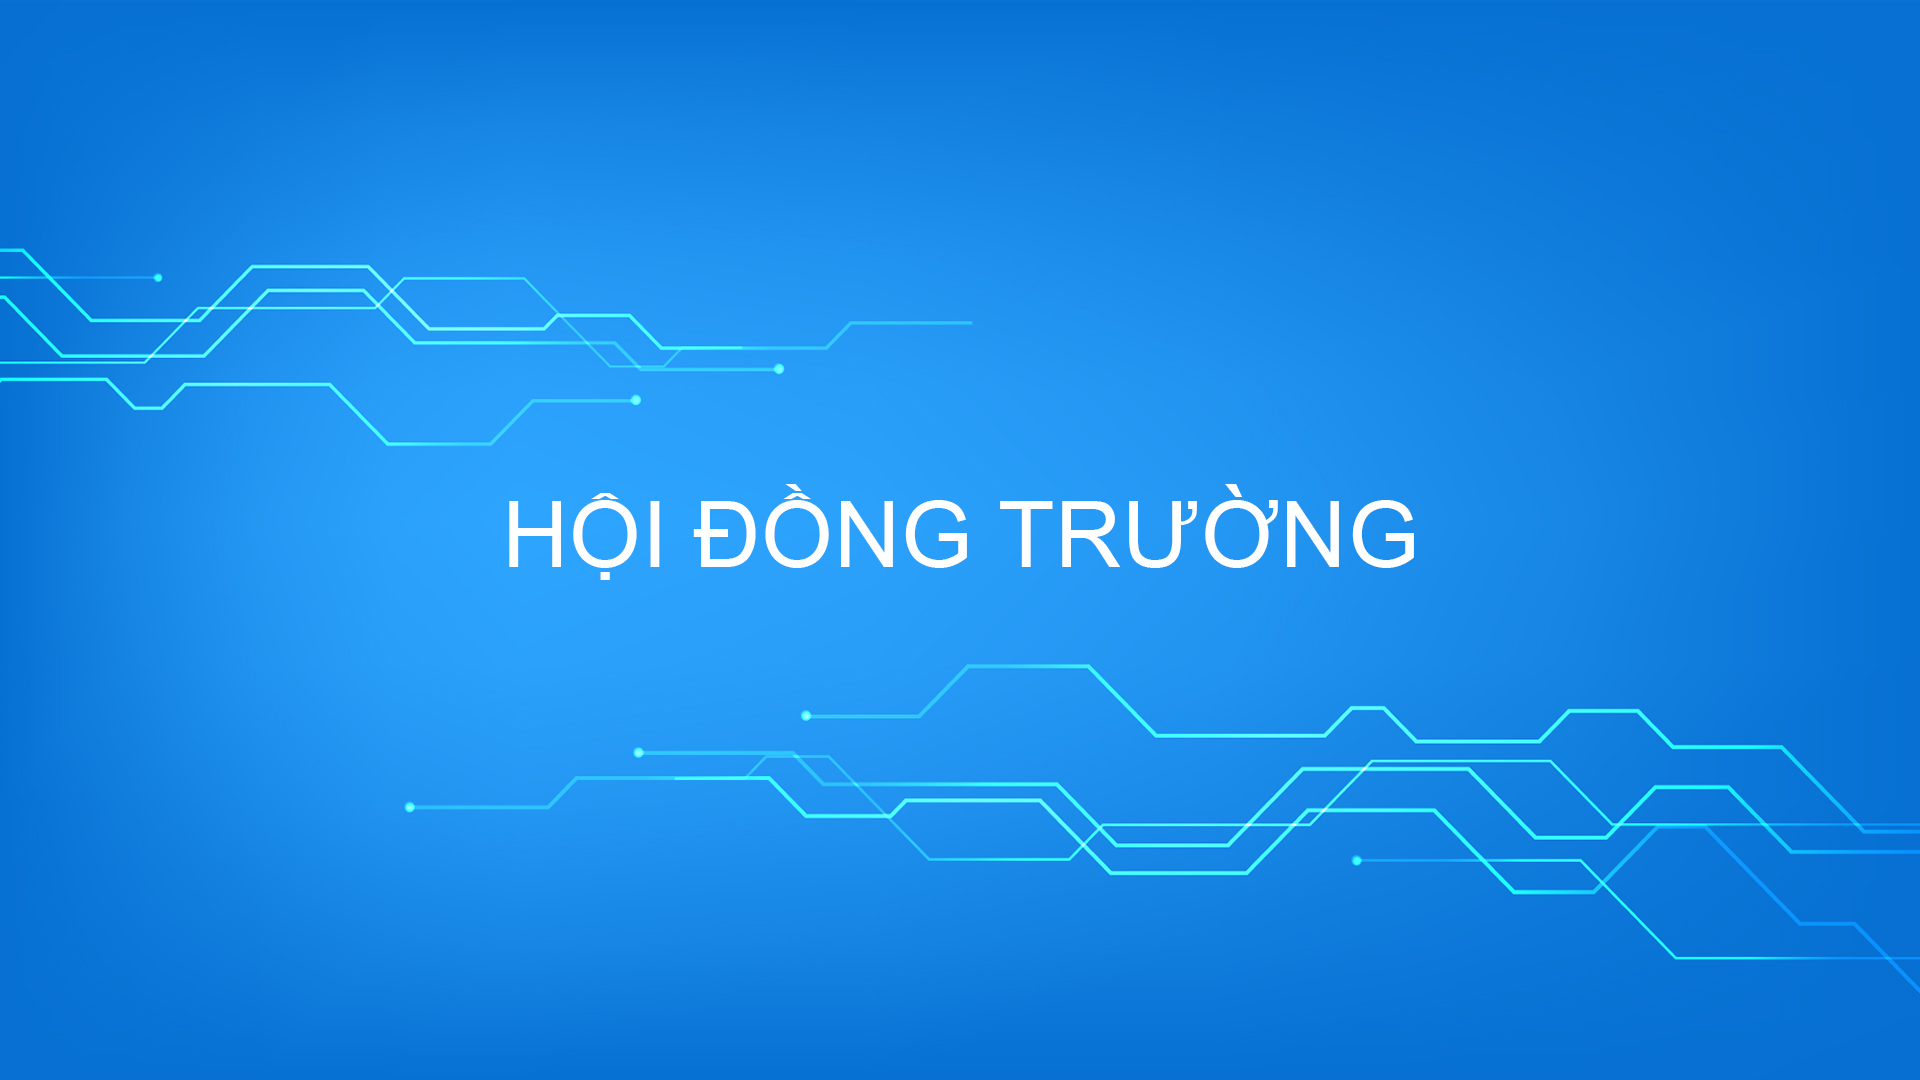 HOI DONG TRUONG 2